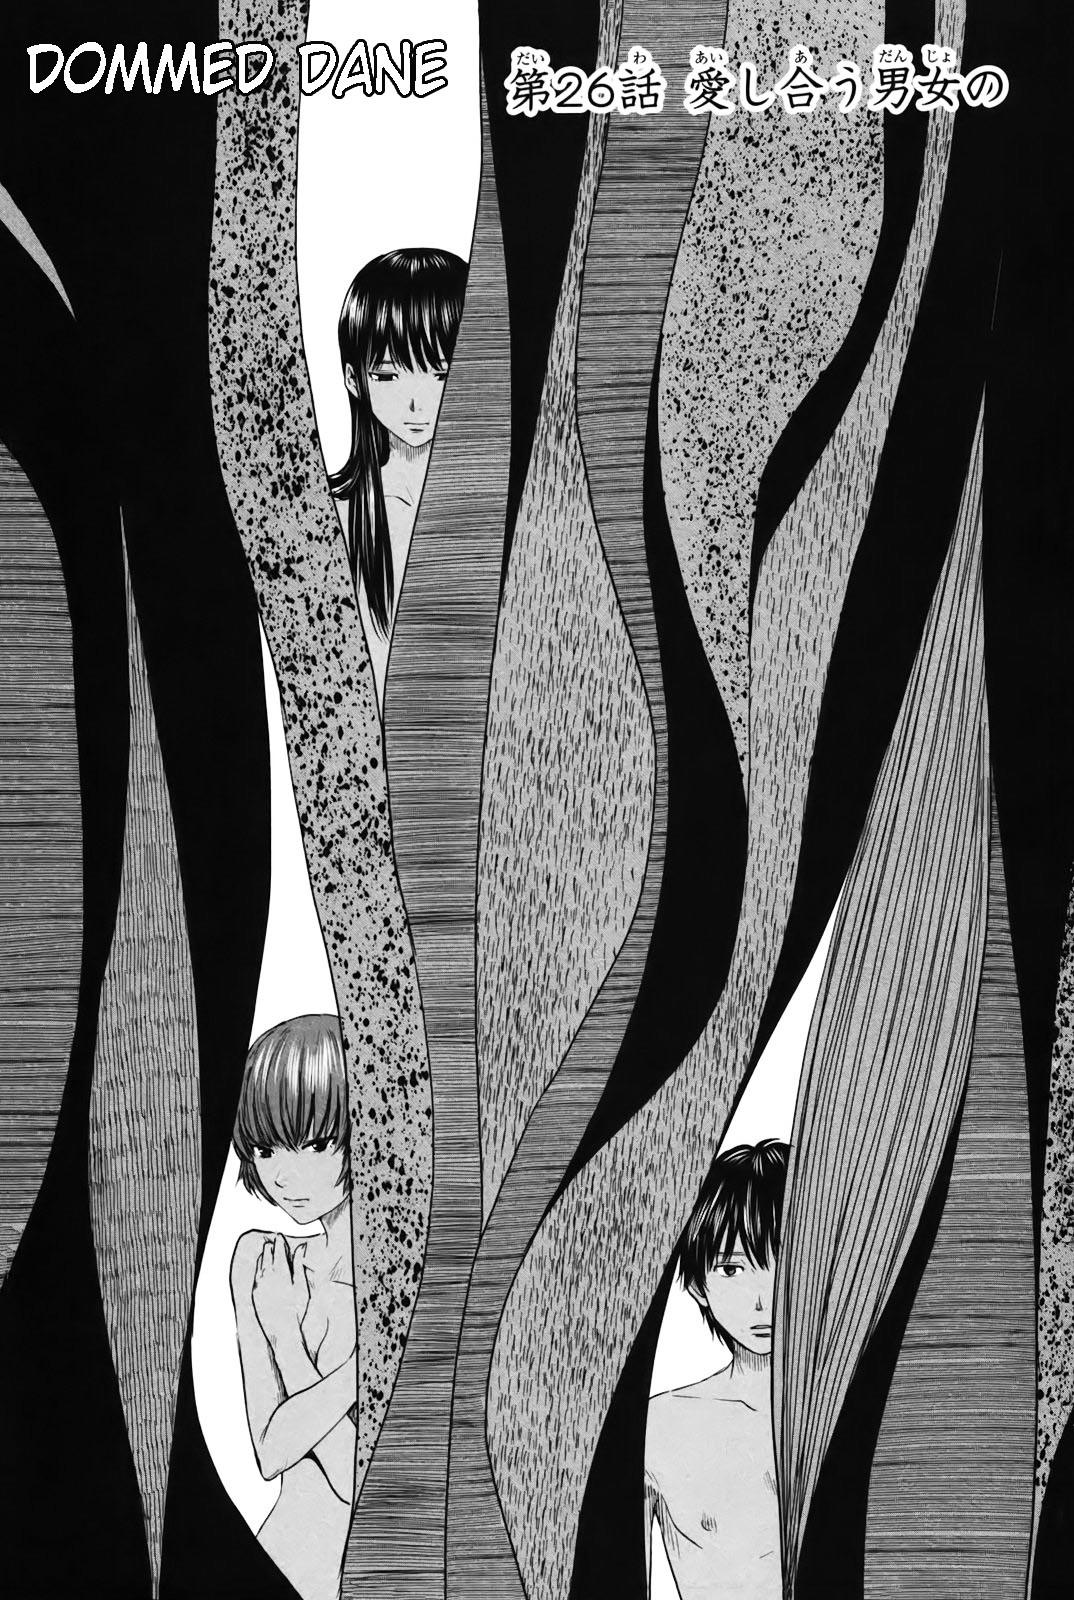 Read Aku No Hana Vol.1 Chapter 1 : The Flowers Of Evil on Mangakakalot